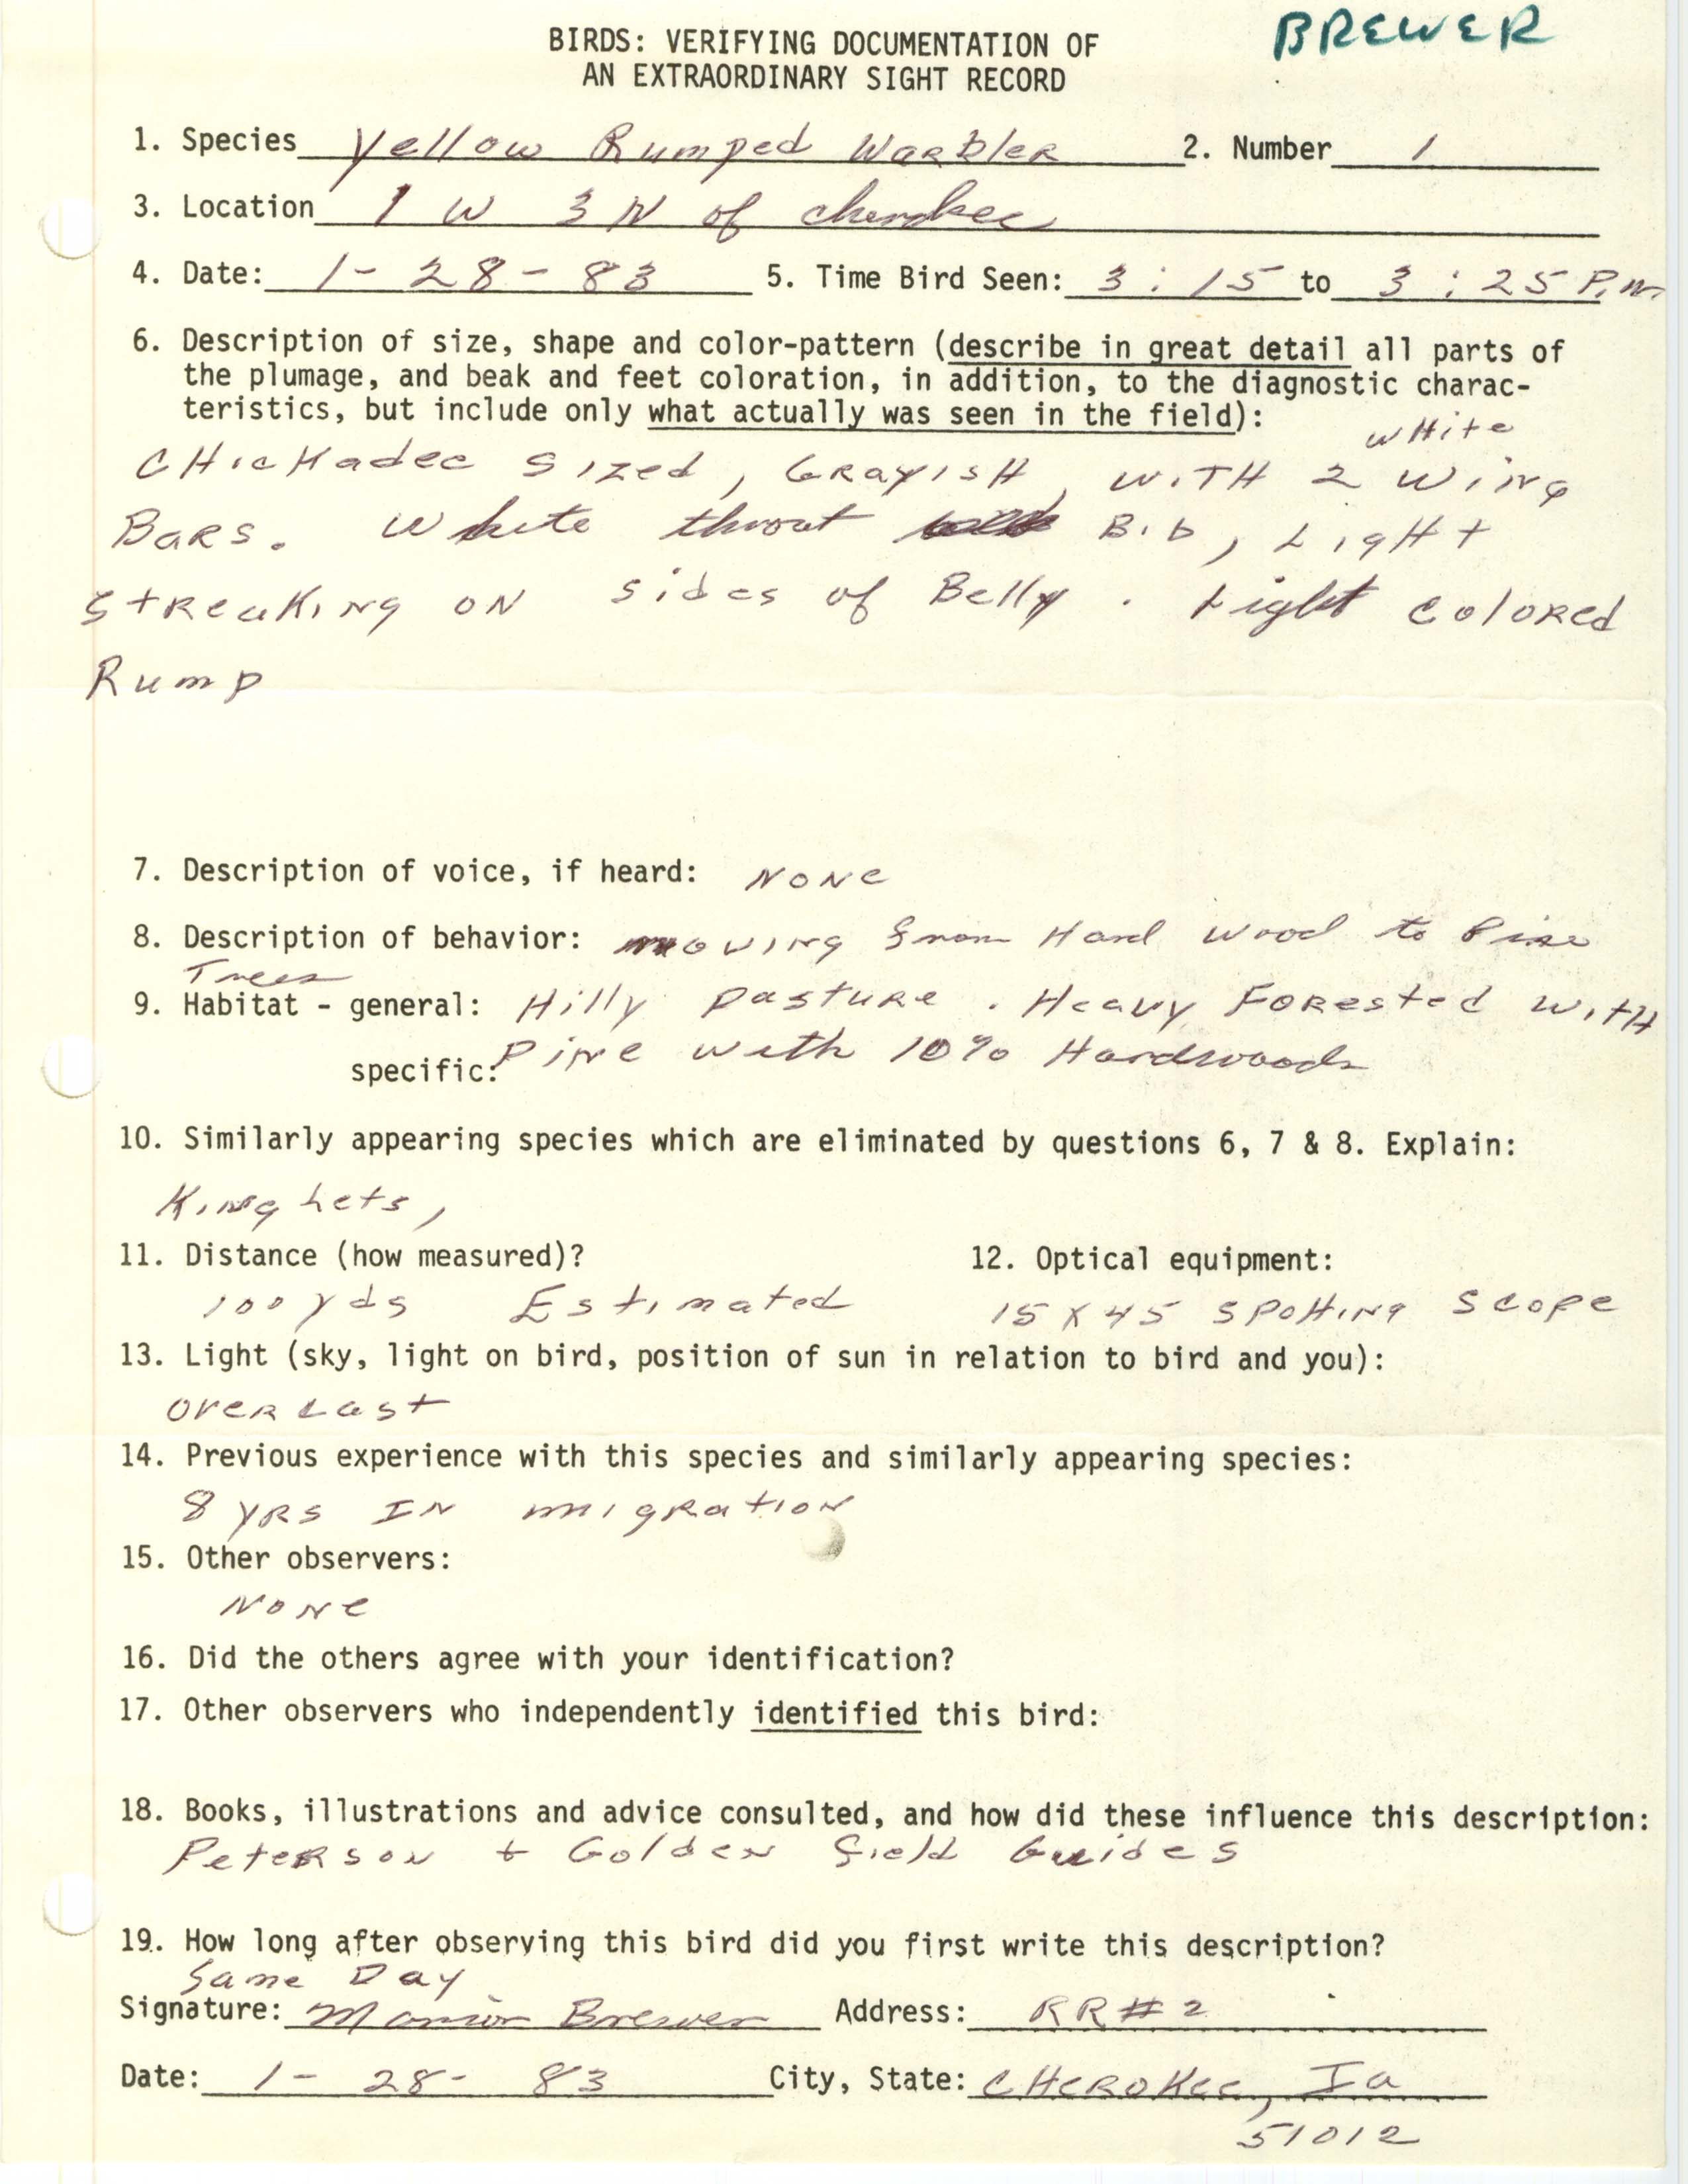 Rare bird documentation form for Yellow-rumped Warbler northwest of Cherokee, 1983